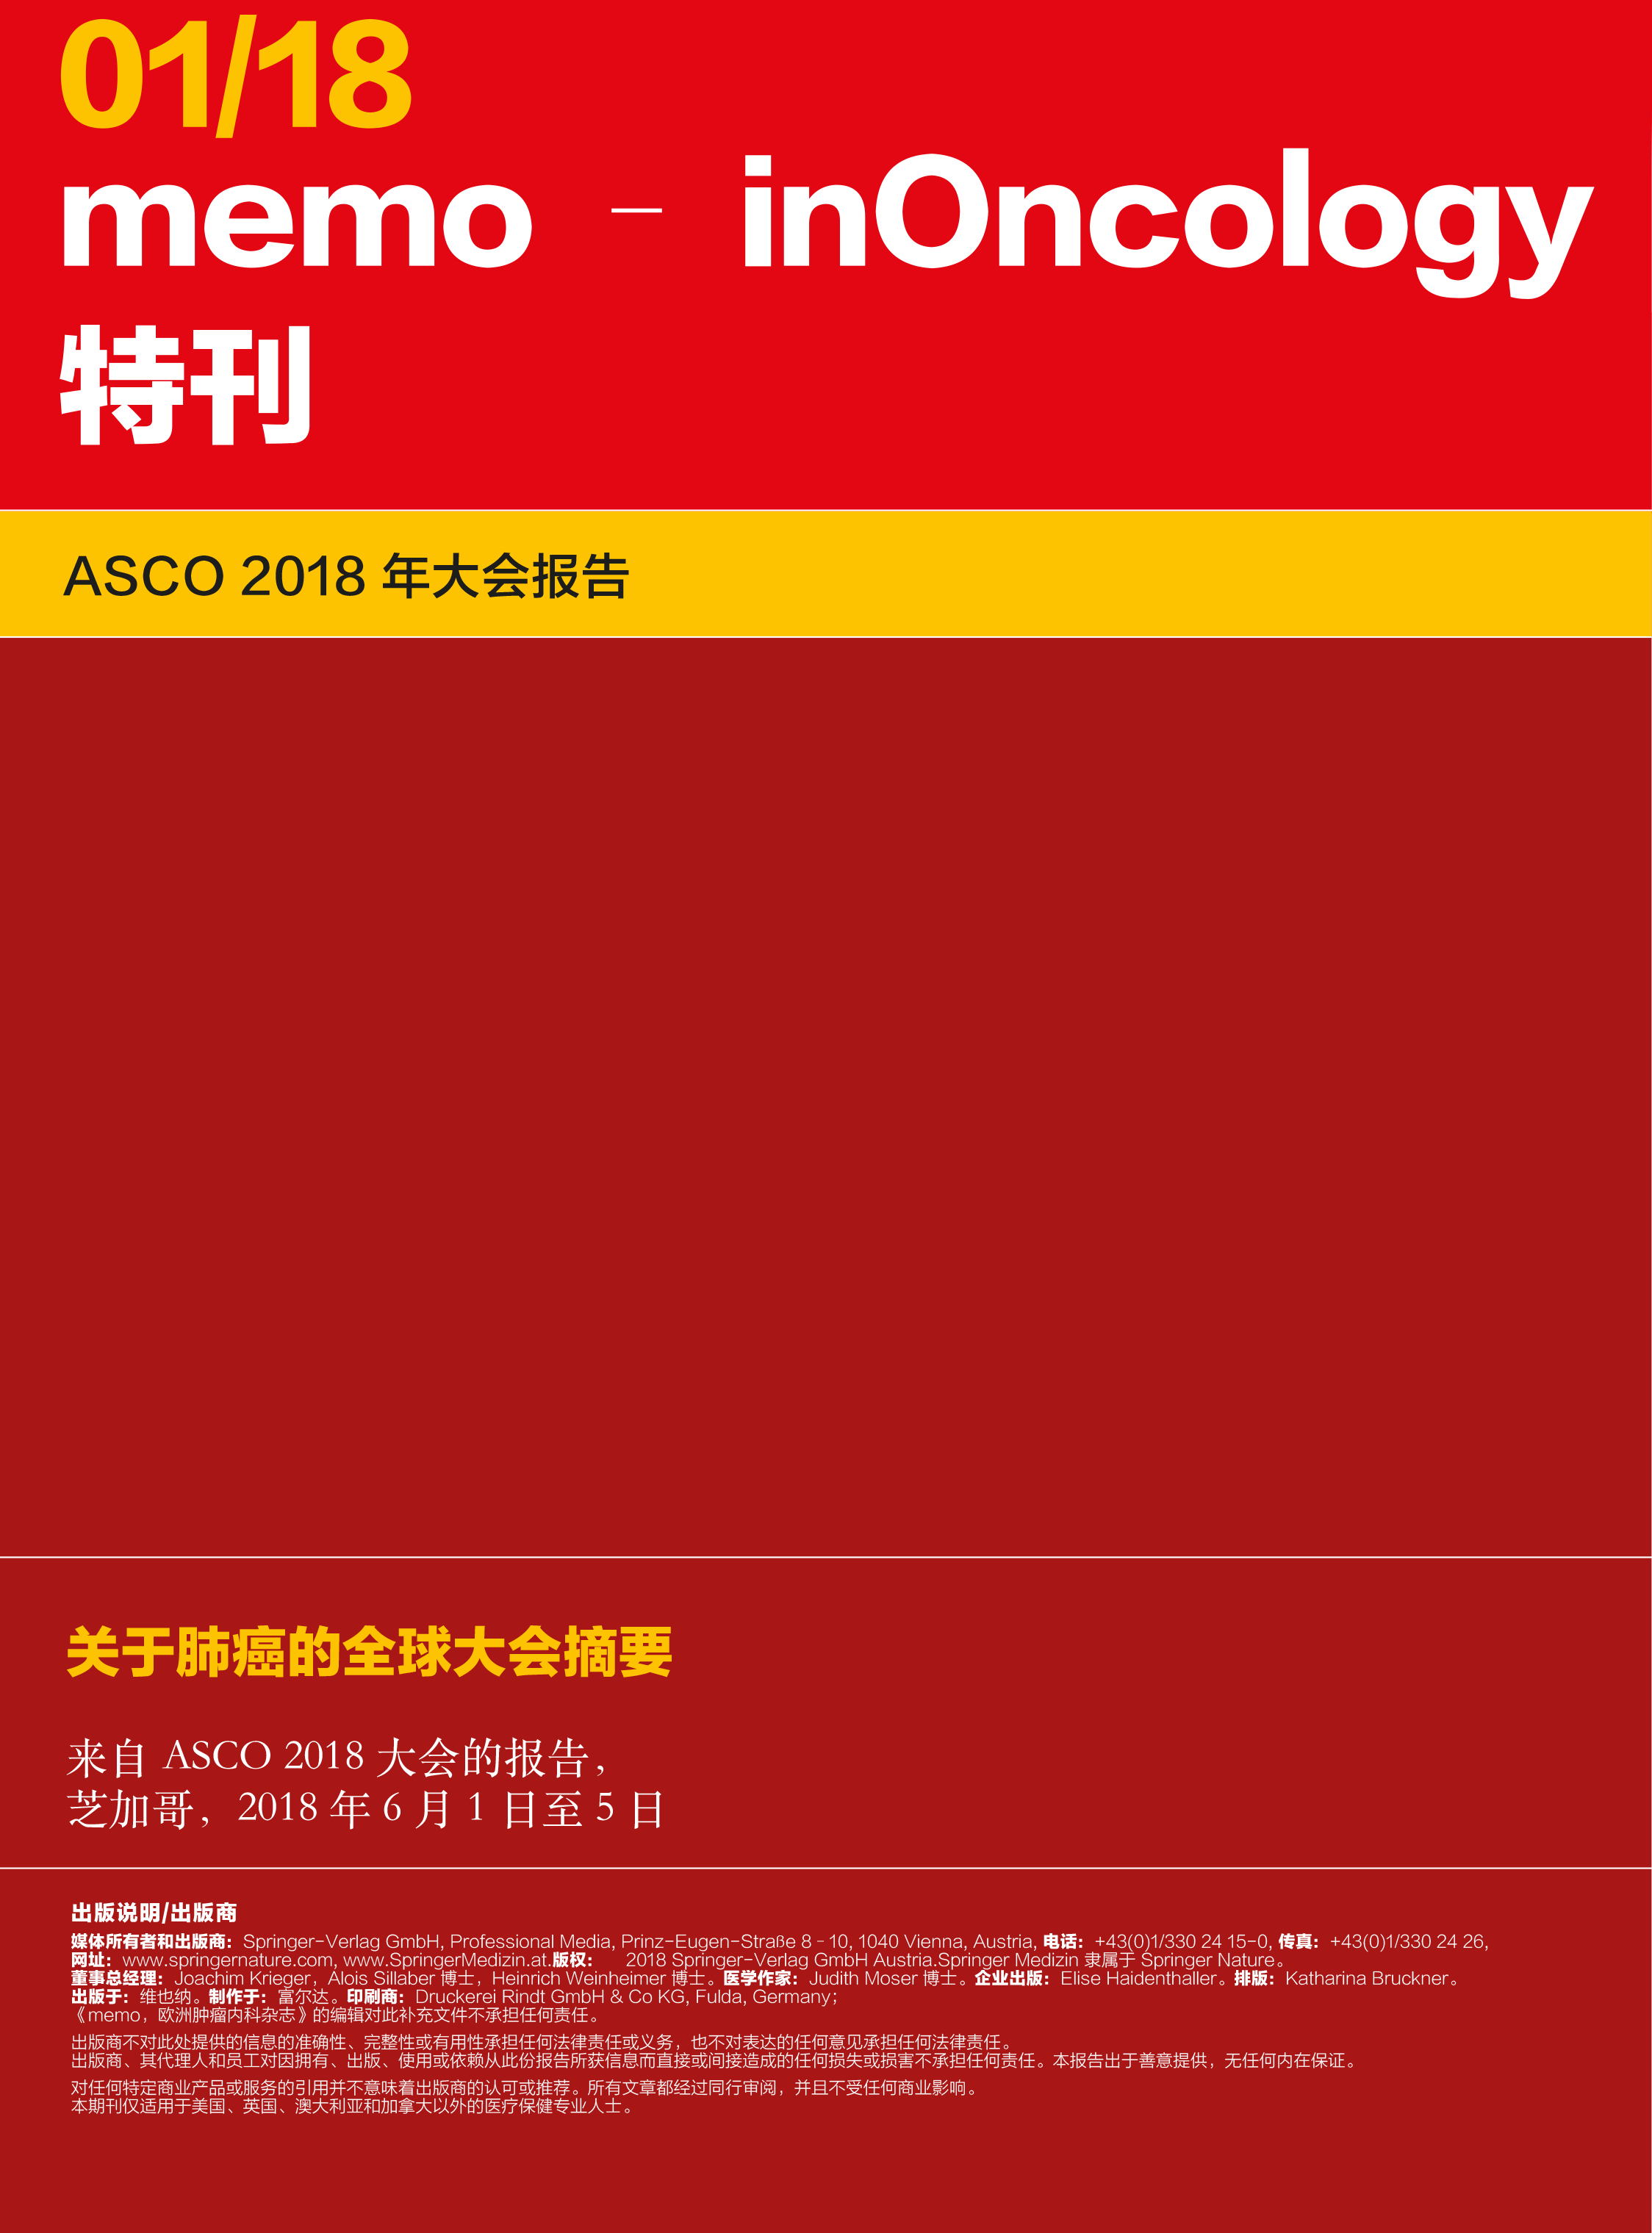 ASCO 2018 Mandarin